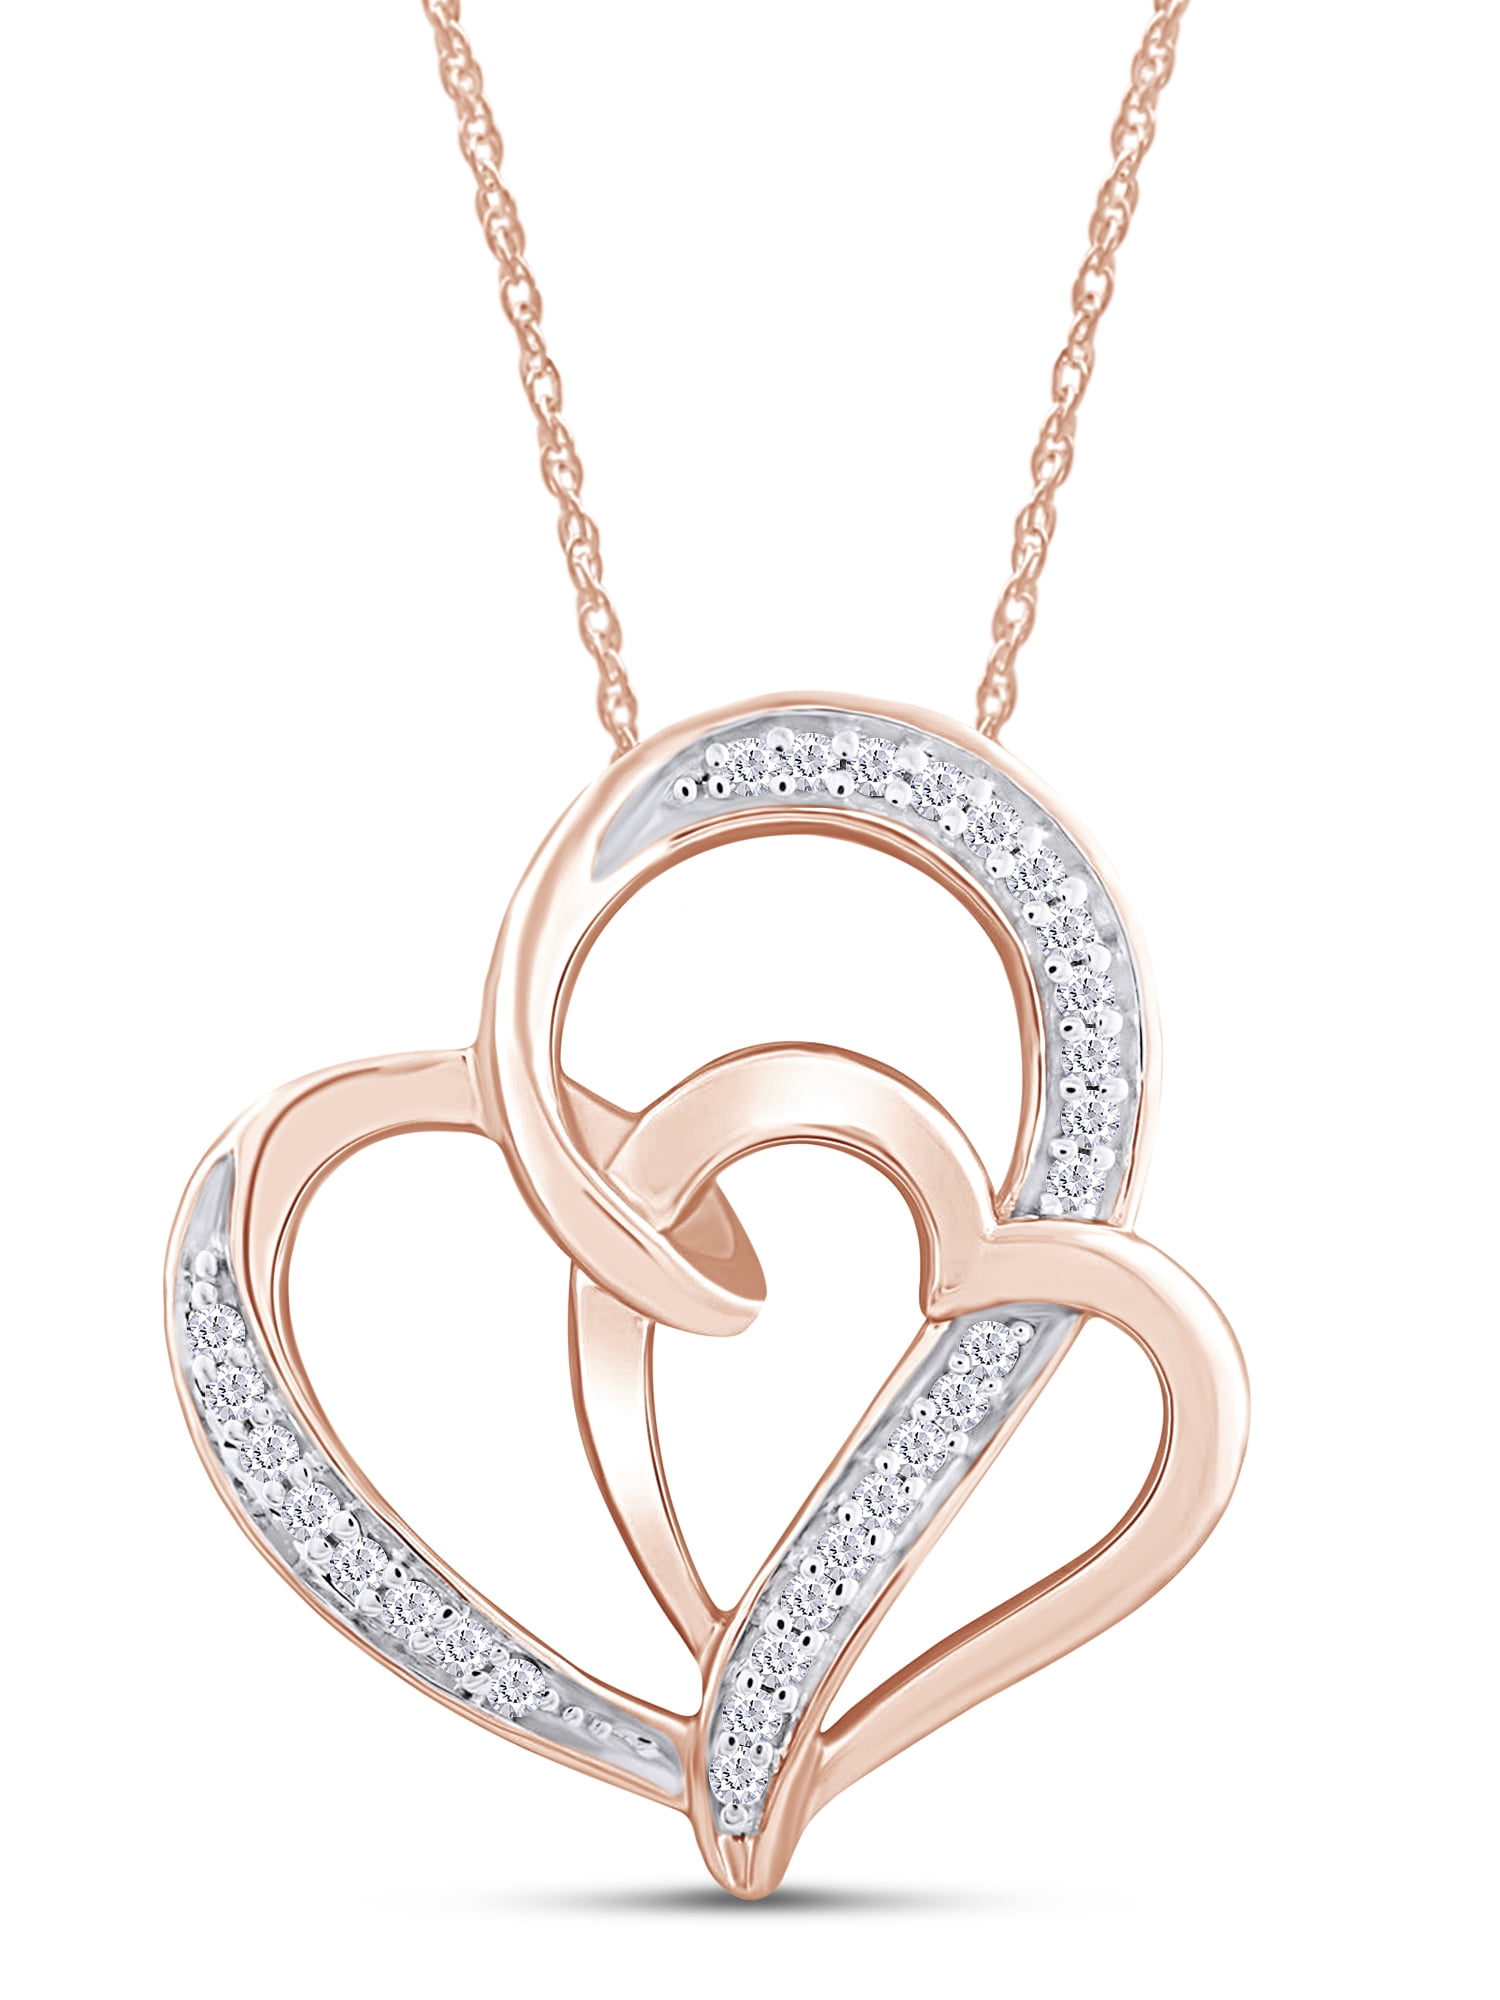 Wishrocks 14K White Gold Over Sterling Silver Interlocking Heart Circles Pendant Necklace 